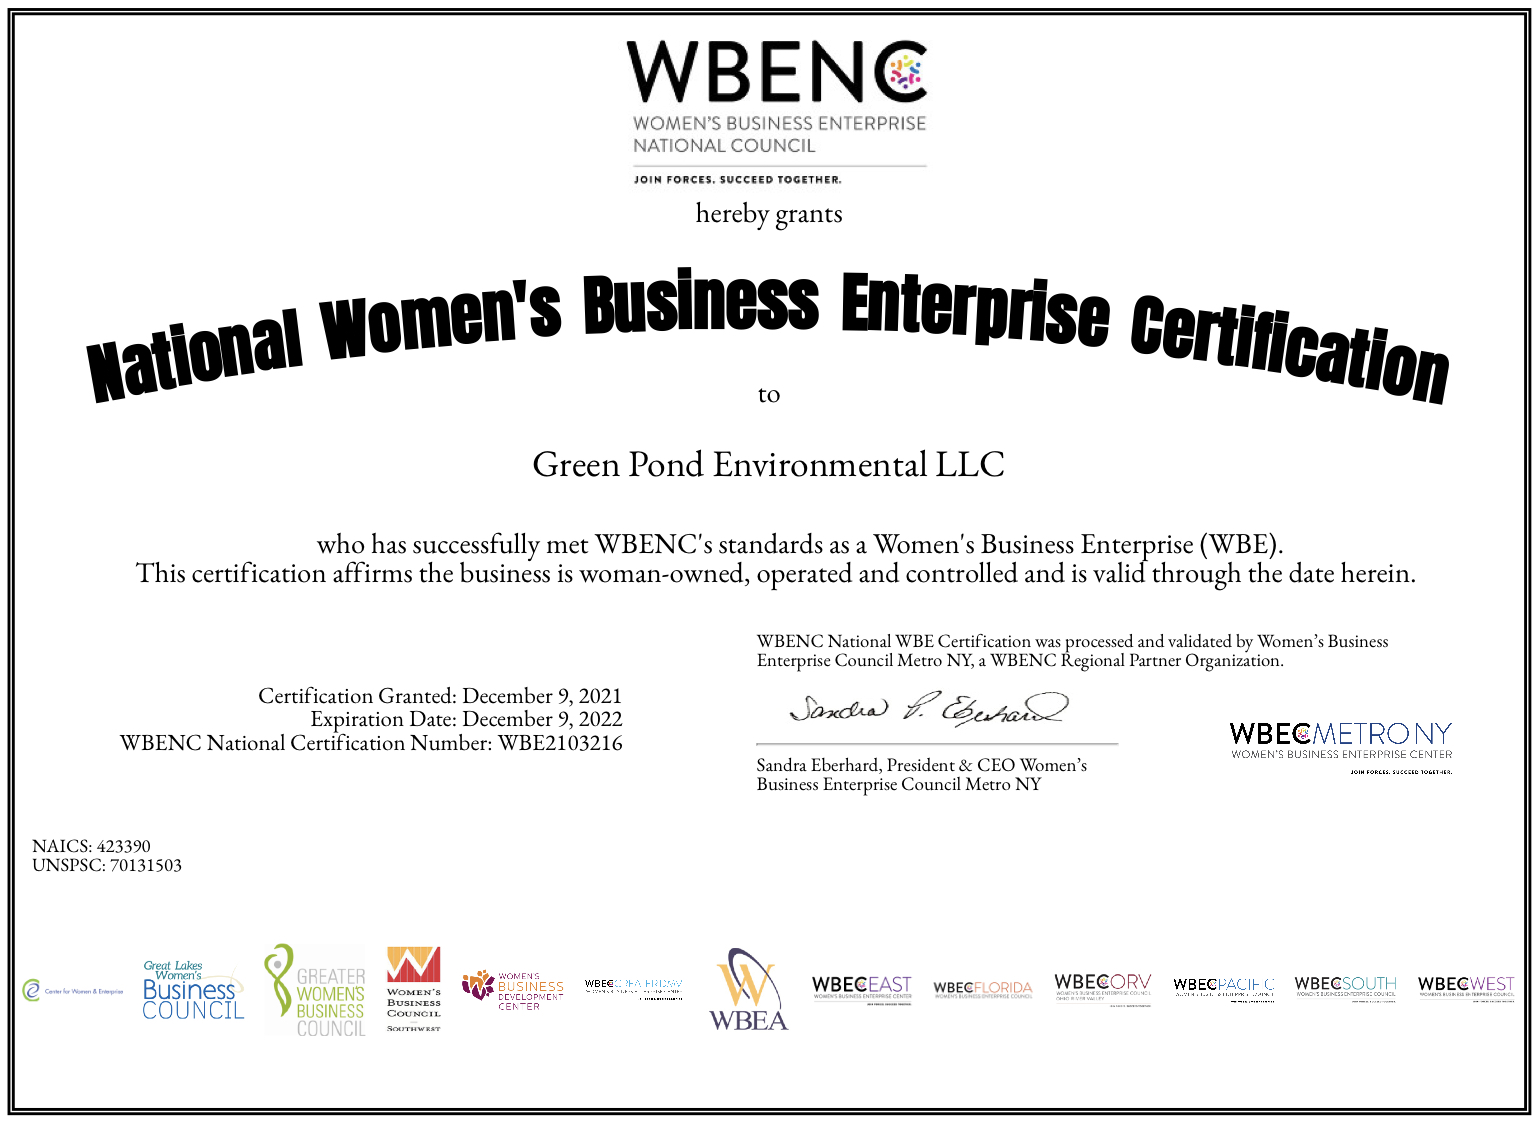 NWBEC Certification